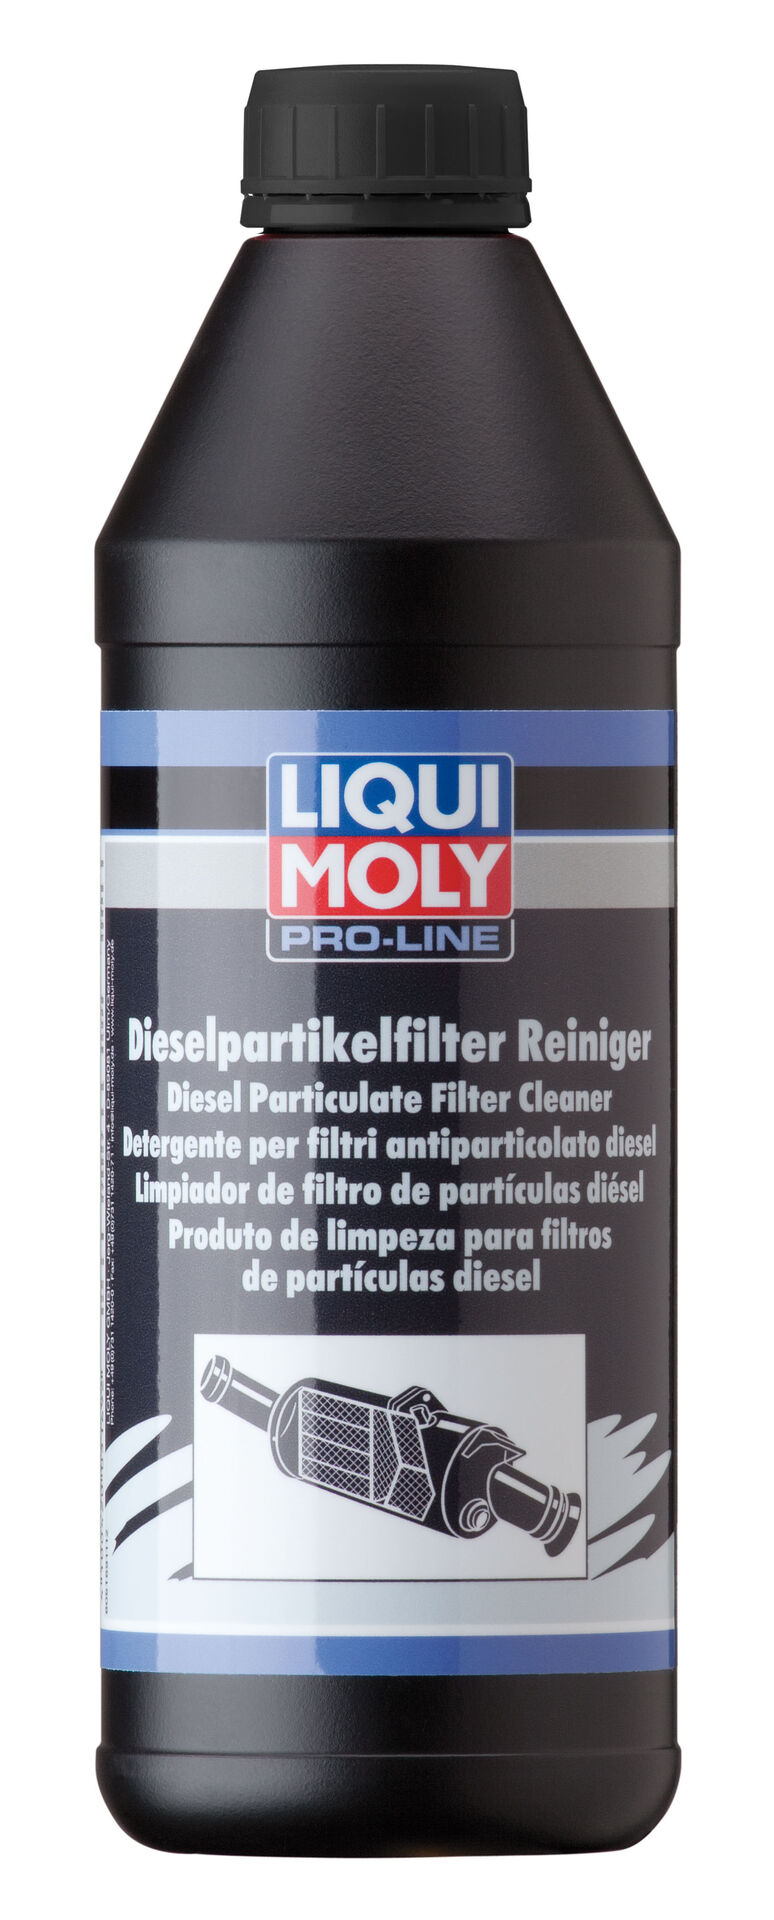  LIQUI MOLY 5169 Pro Line Dieselpartikelfilter Reiniger Dose 1 l